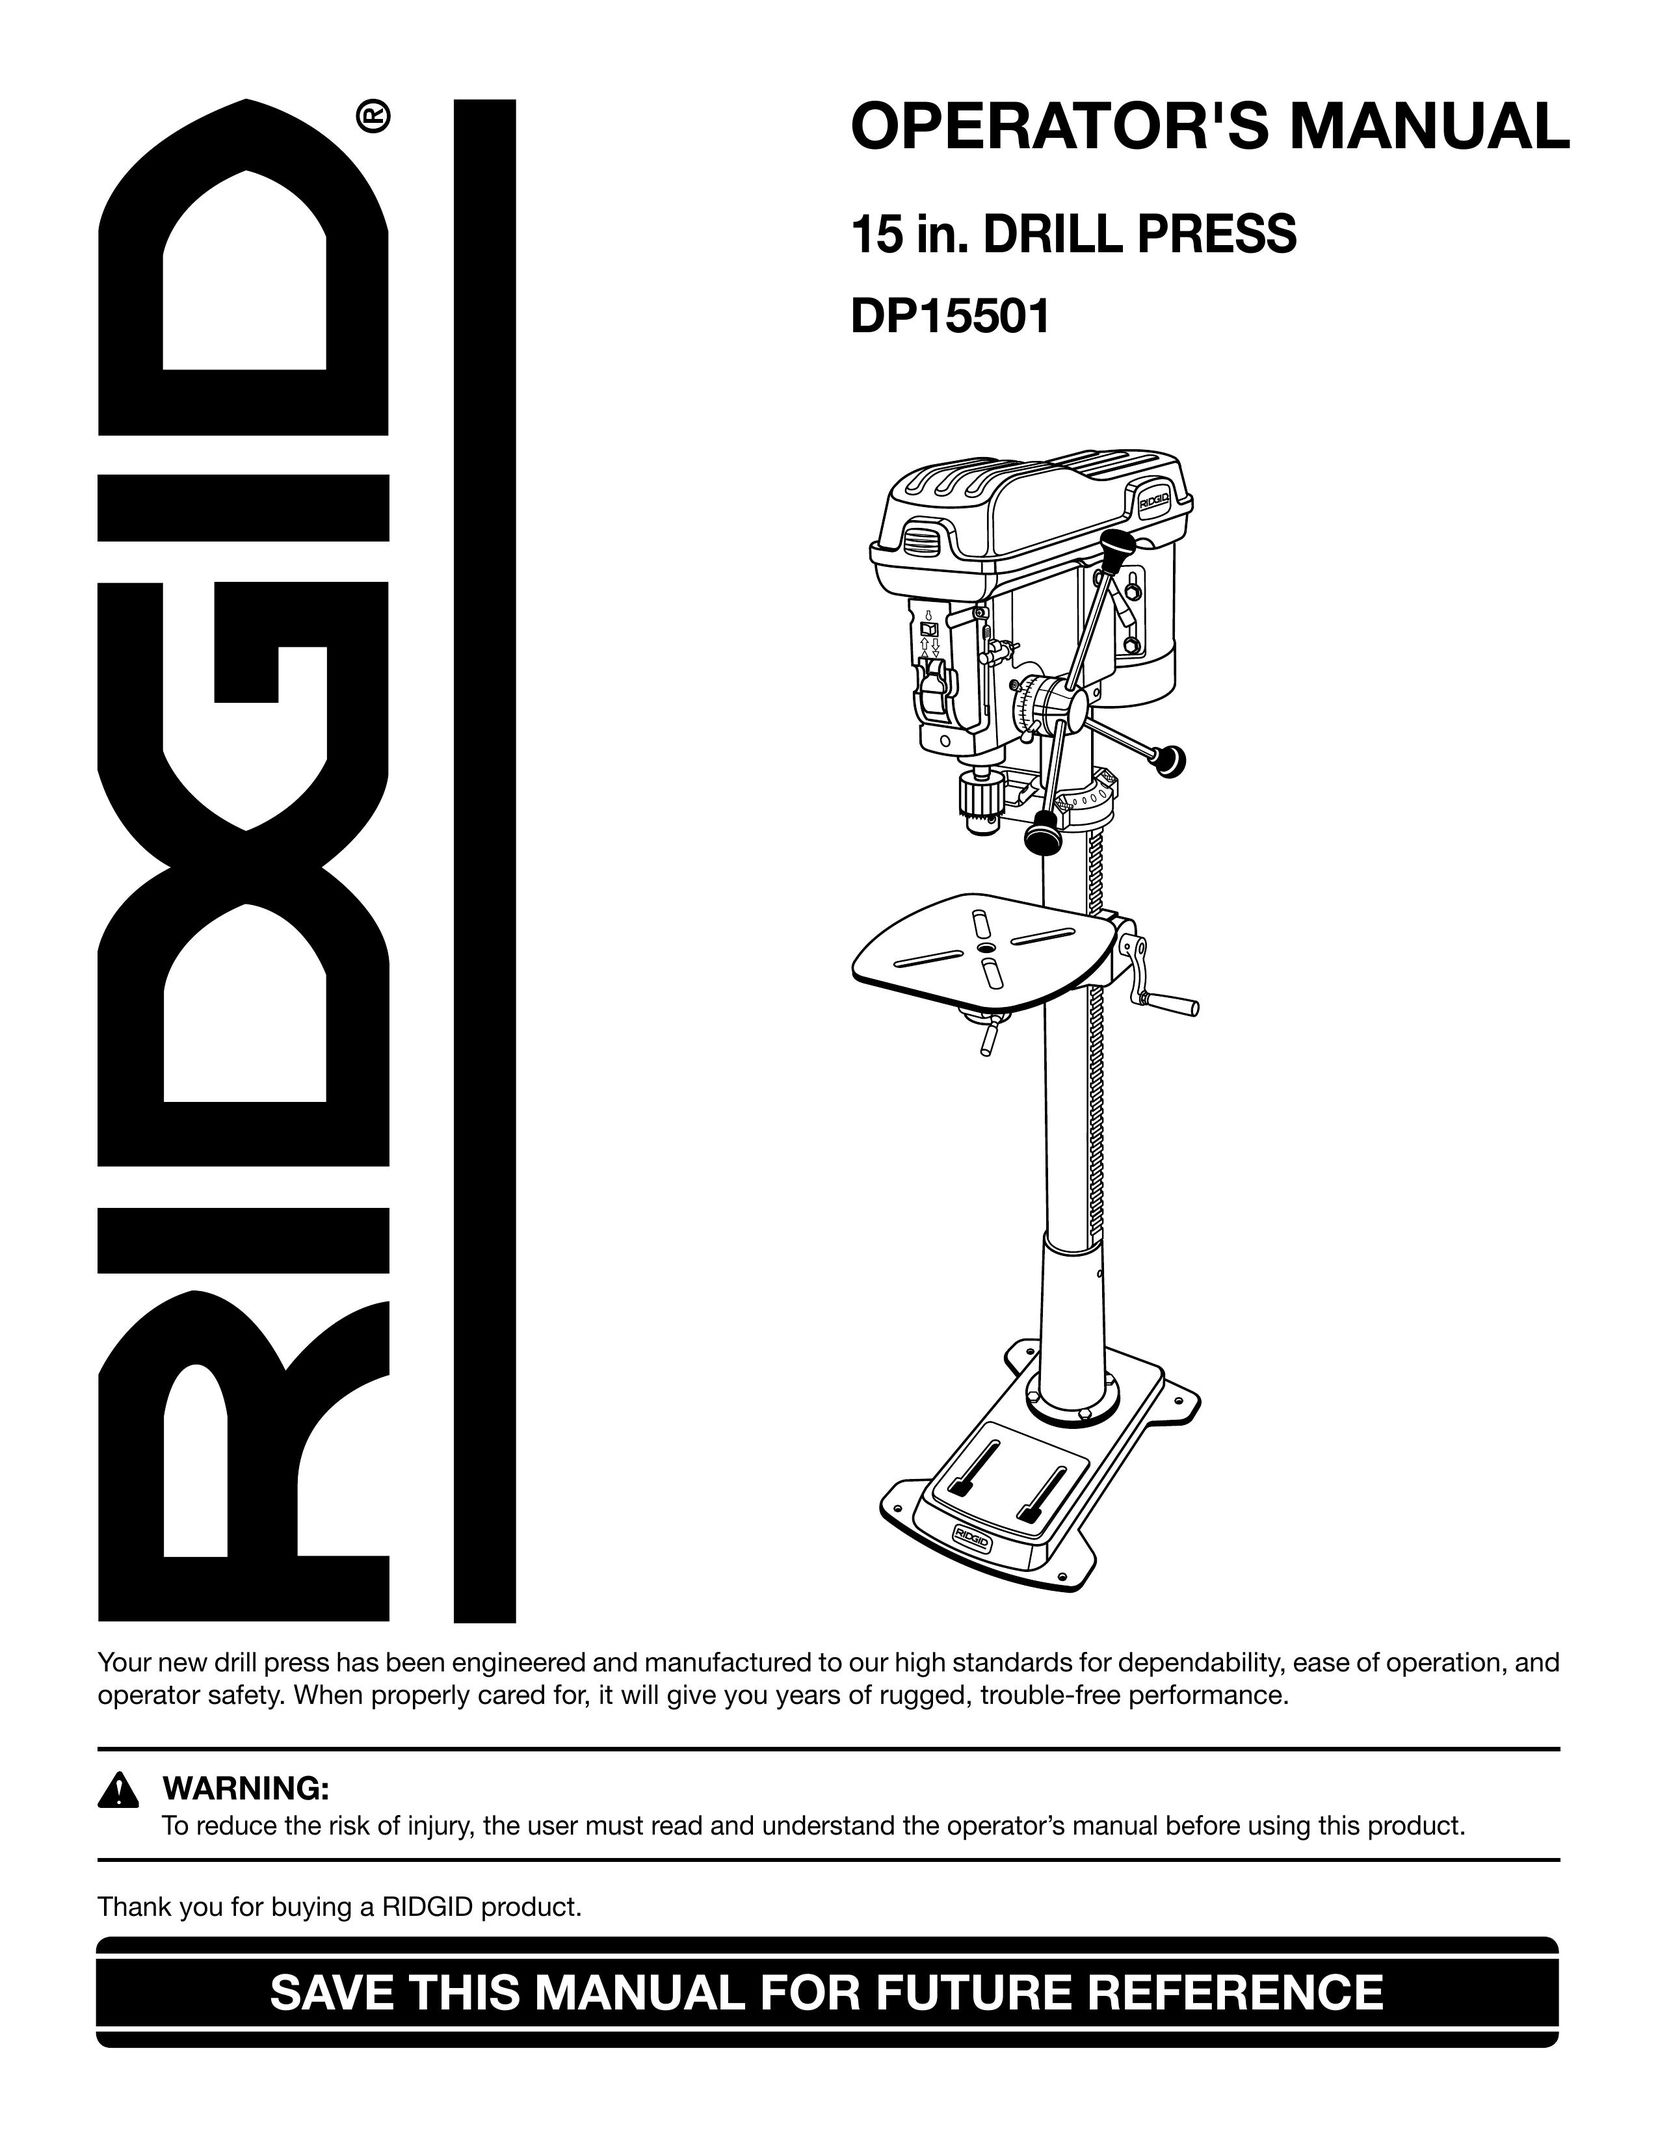 RIDGID DP15501 Drill User Manual